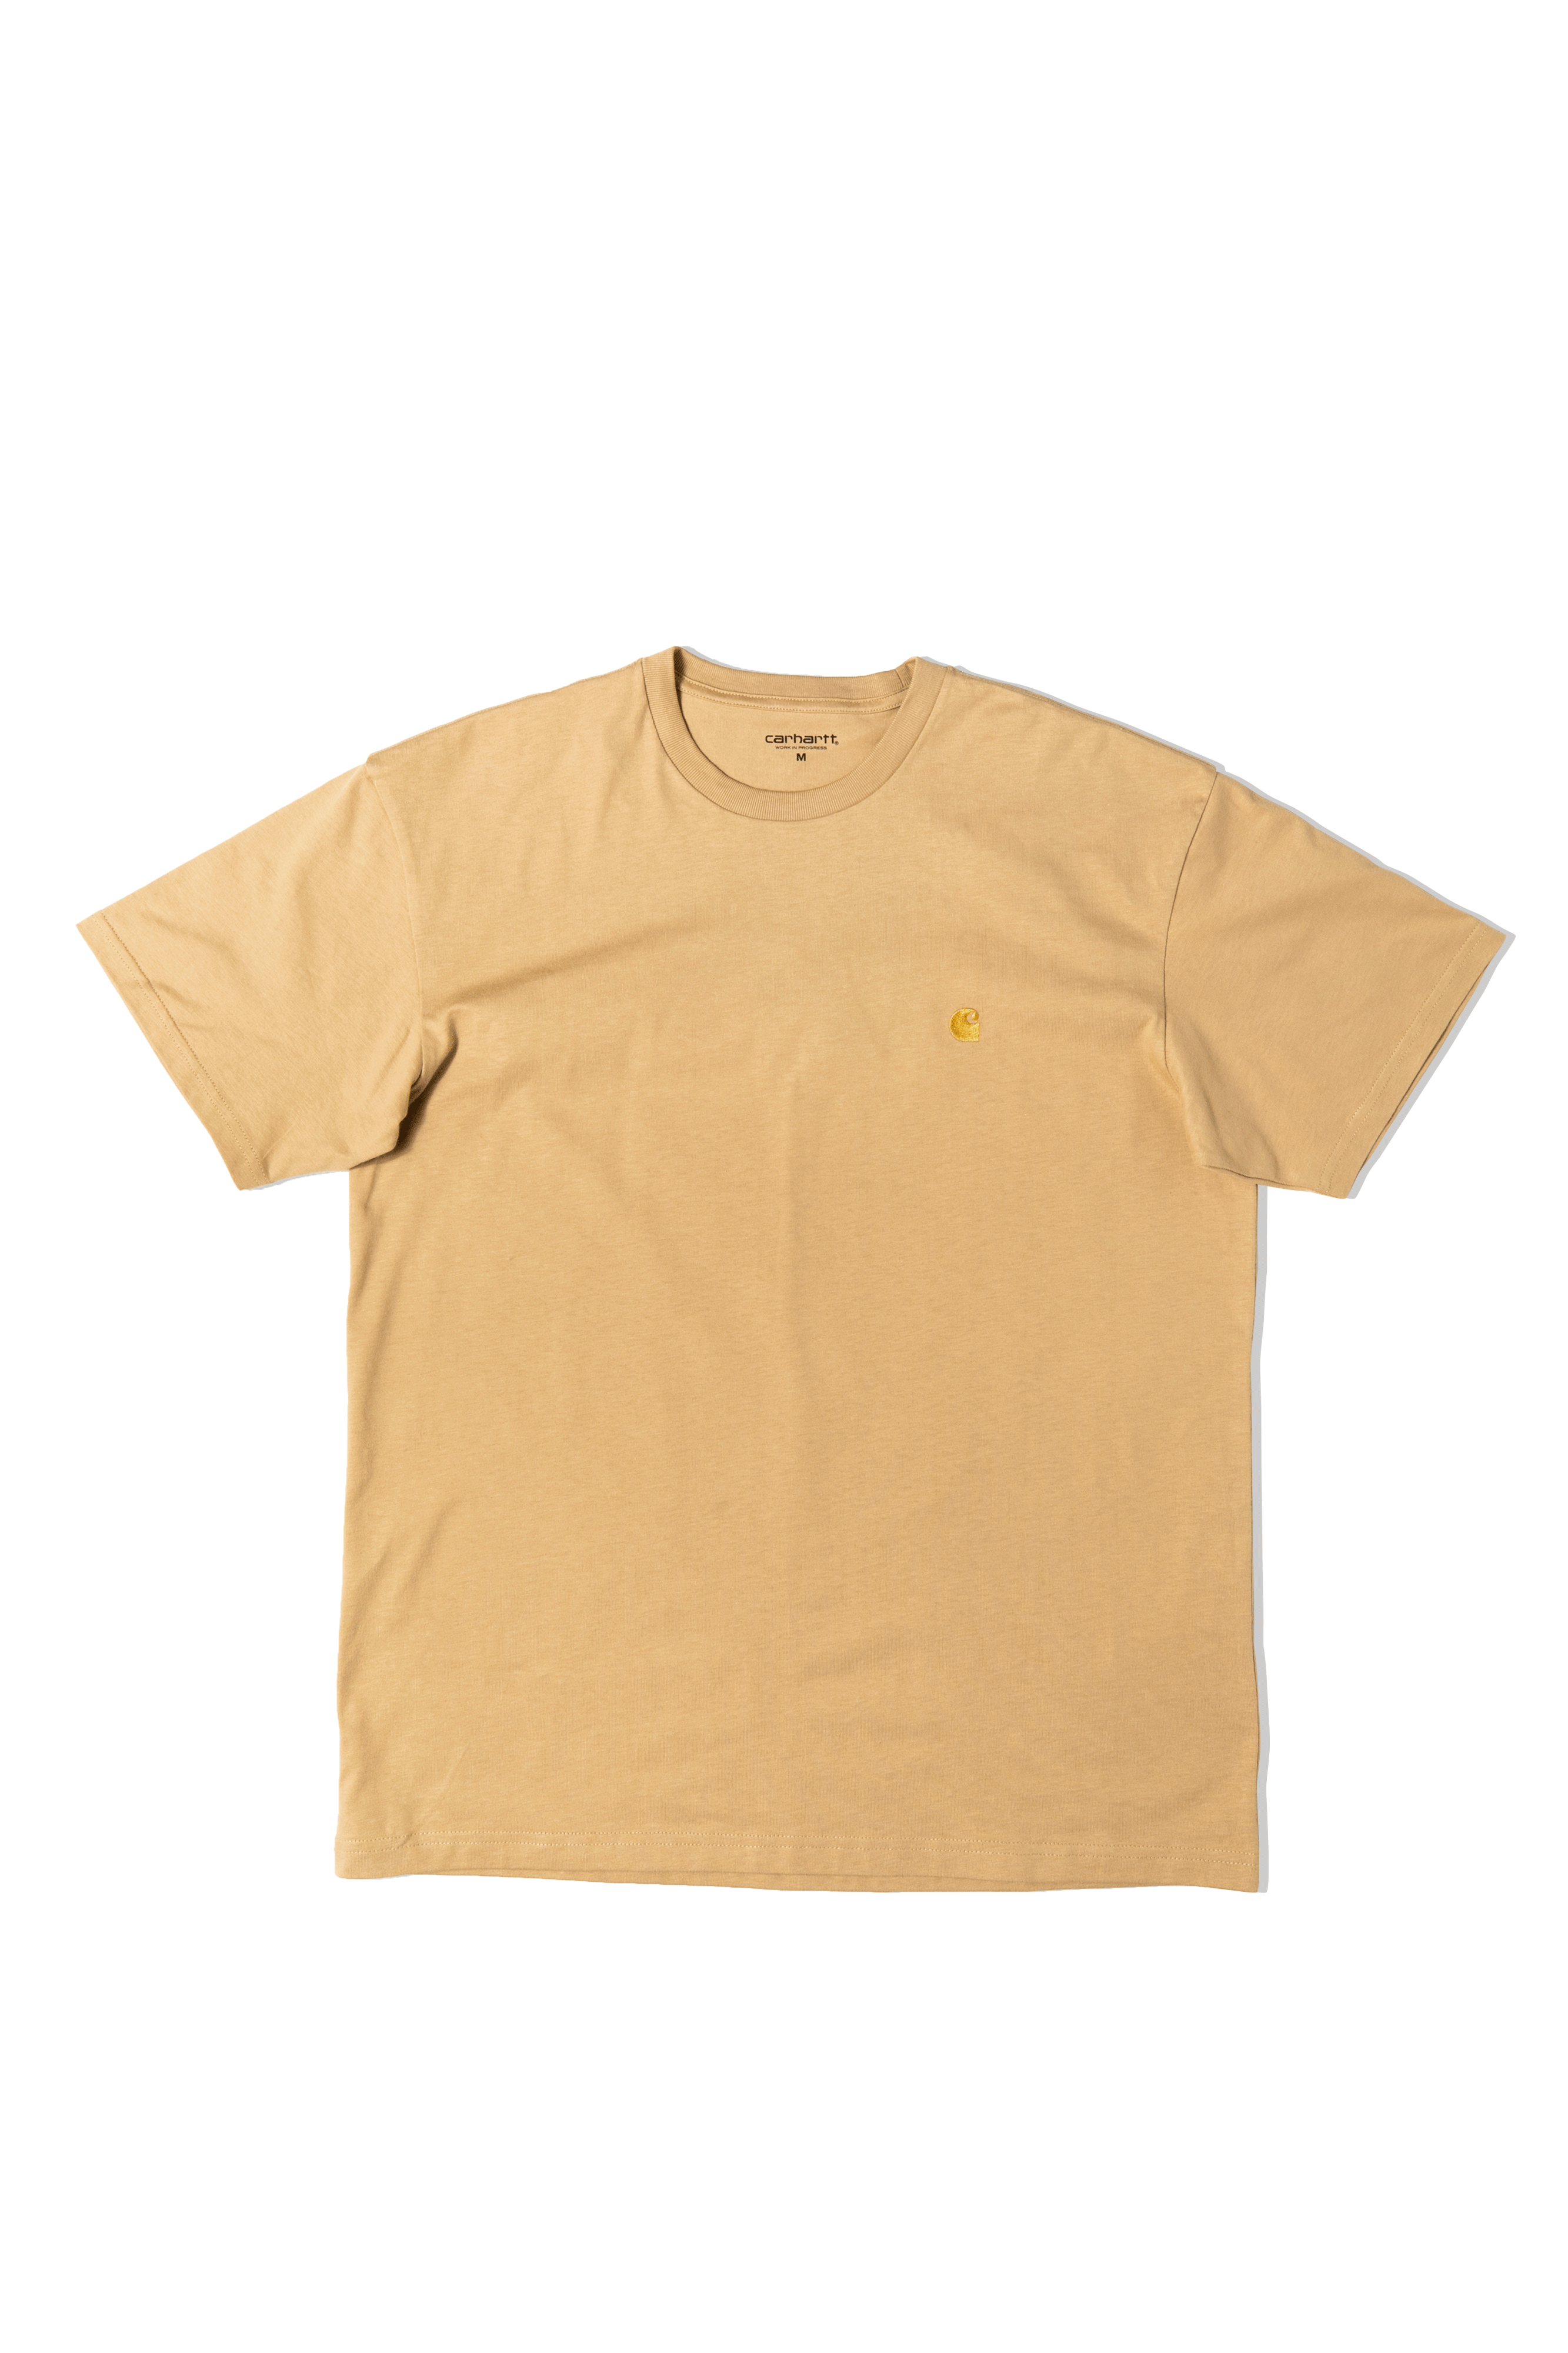 Chase T-Shirt Cotton